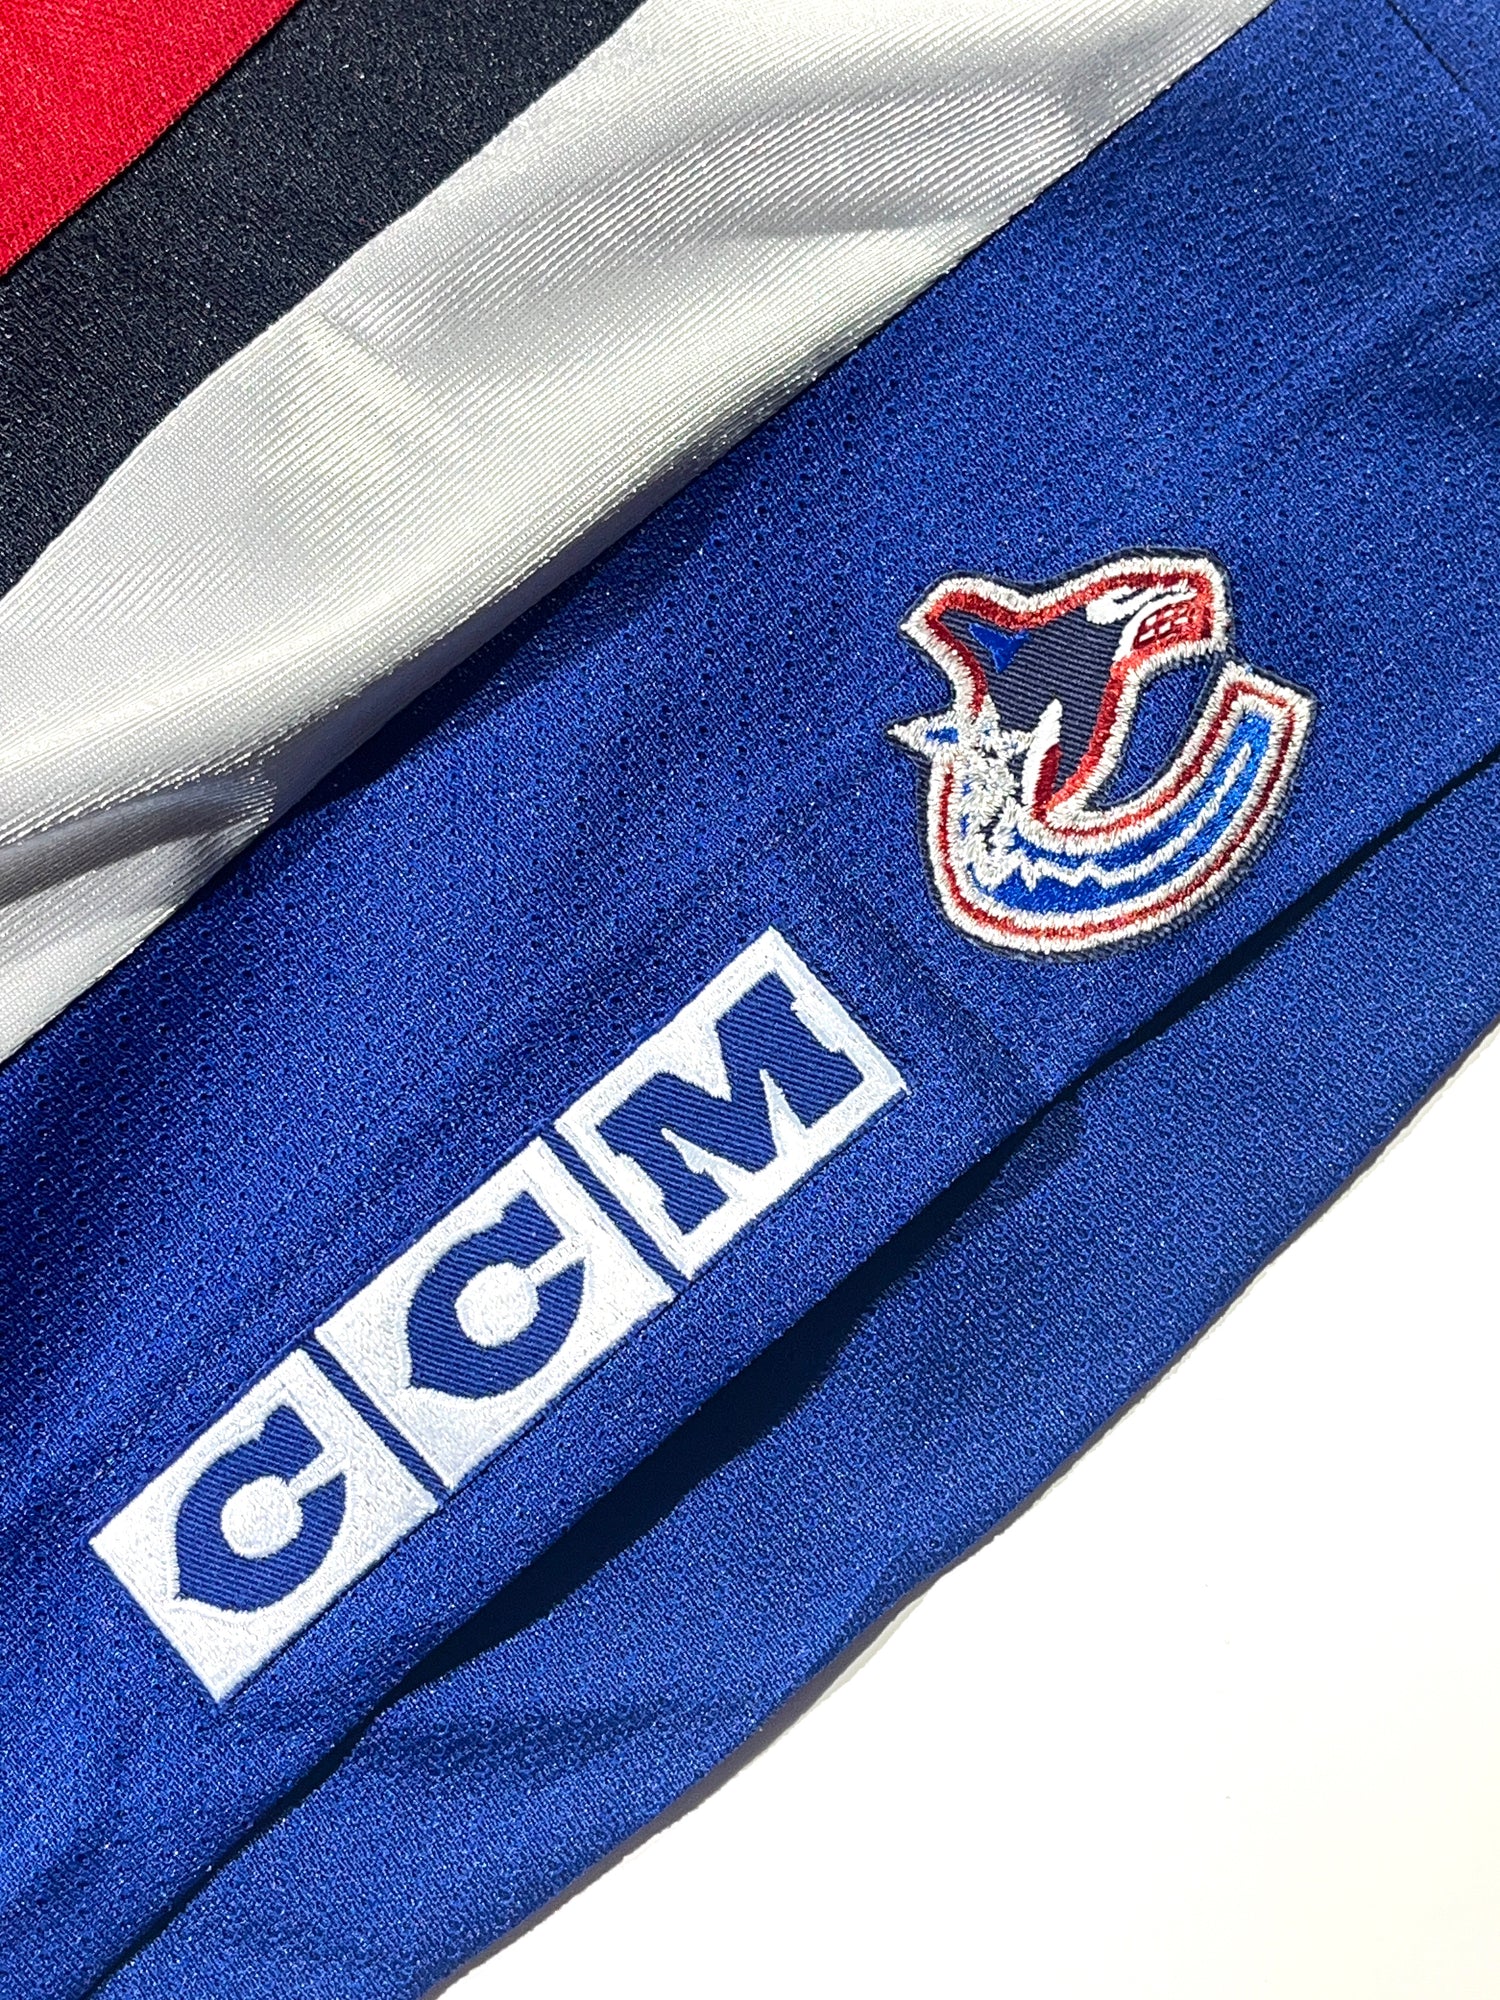 NHL, Shirts, Vancouver Canucks Ccm Nhl Jersey Navy Blue W Orca Logo 2xl  Xxl Sewn Adult